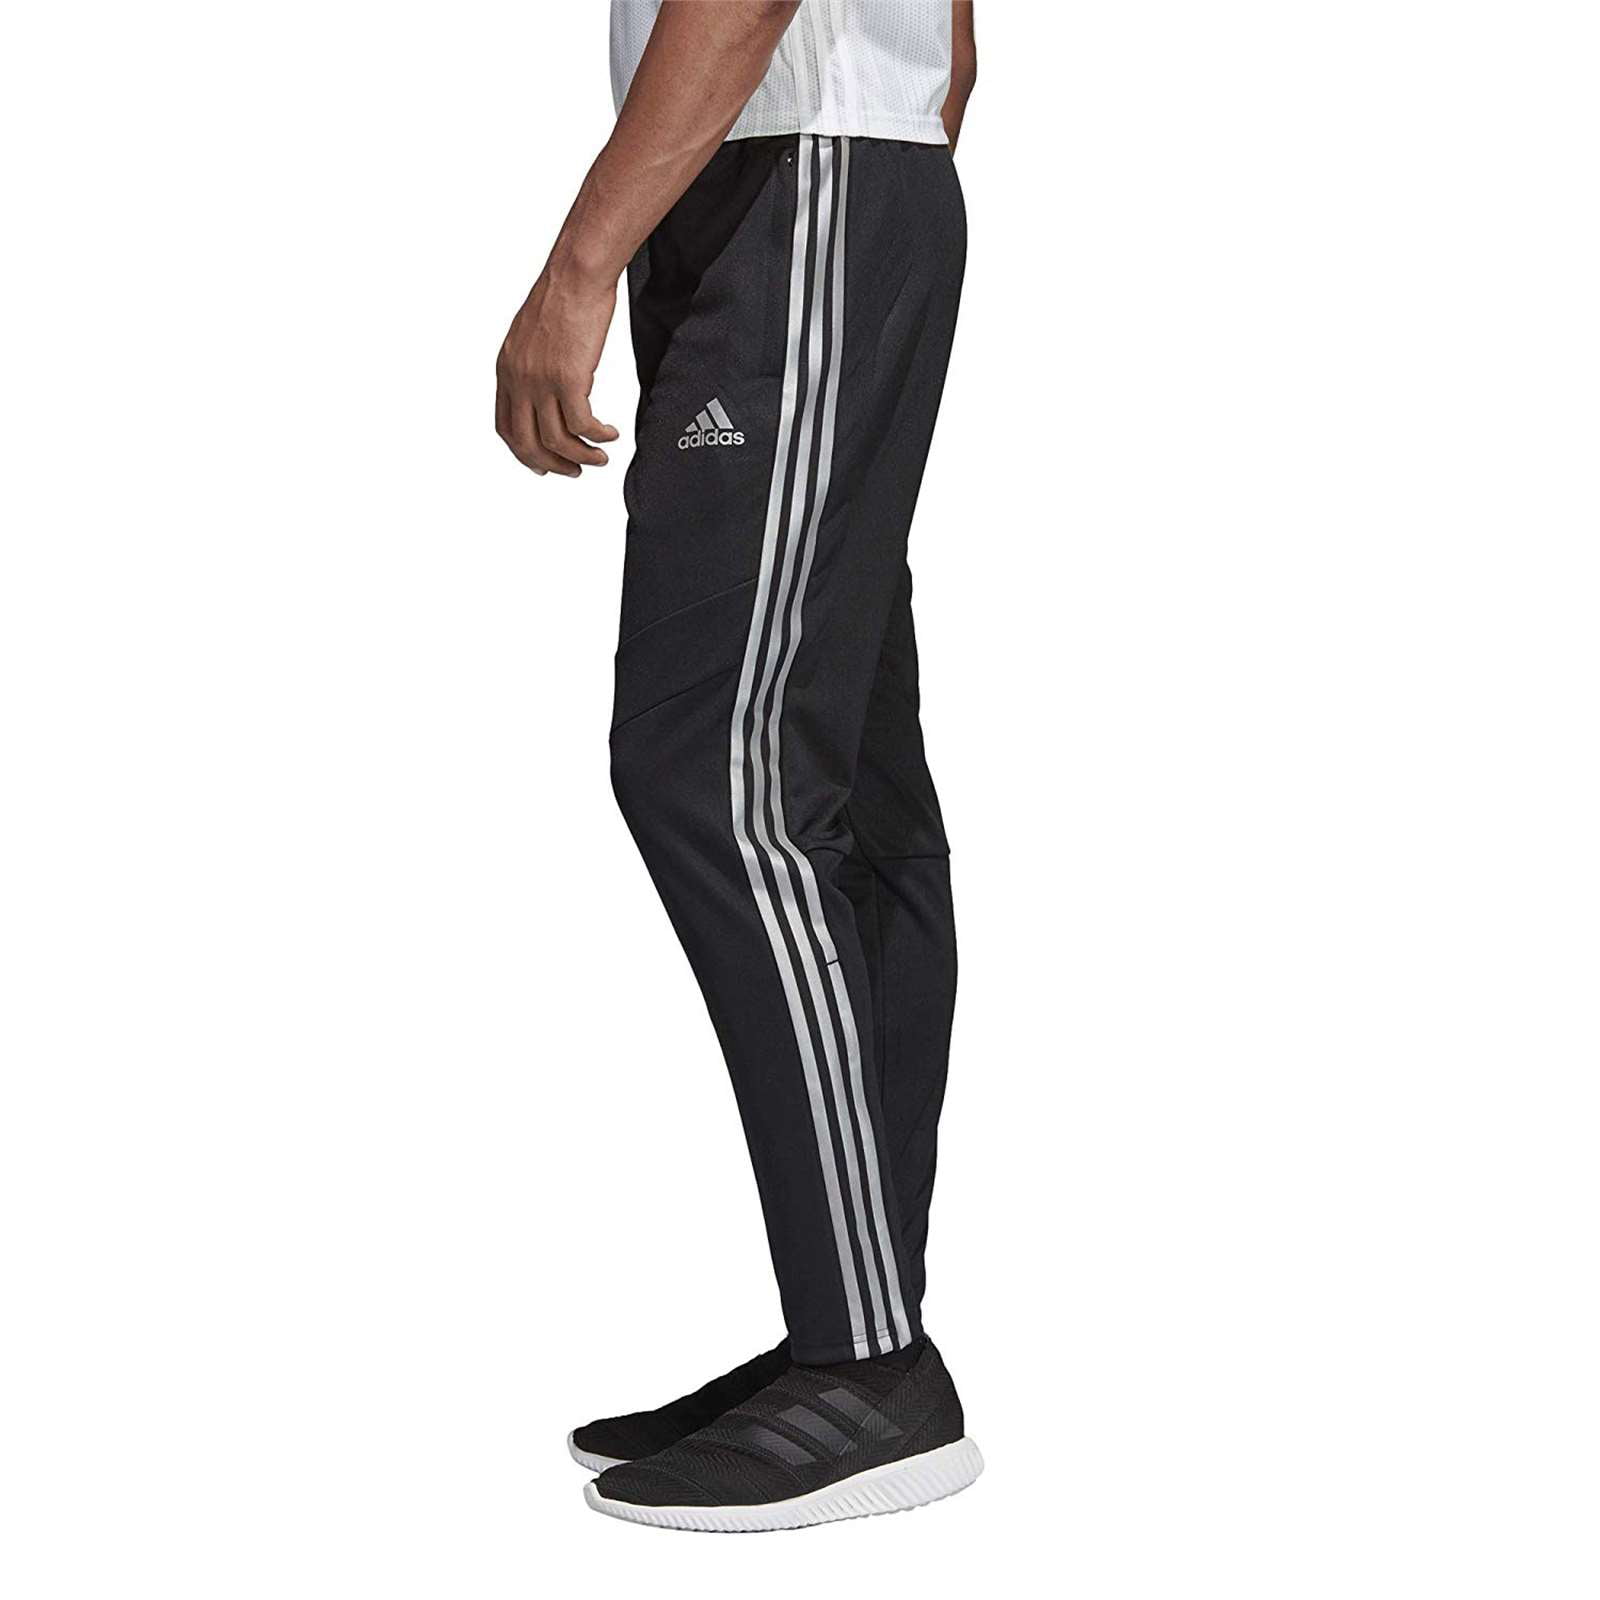 Adidas Climacool Tiro 17 Training Pants Mens Fashion Bottoms Trousers  on Carousell